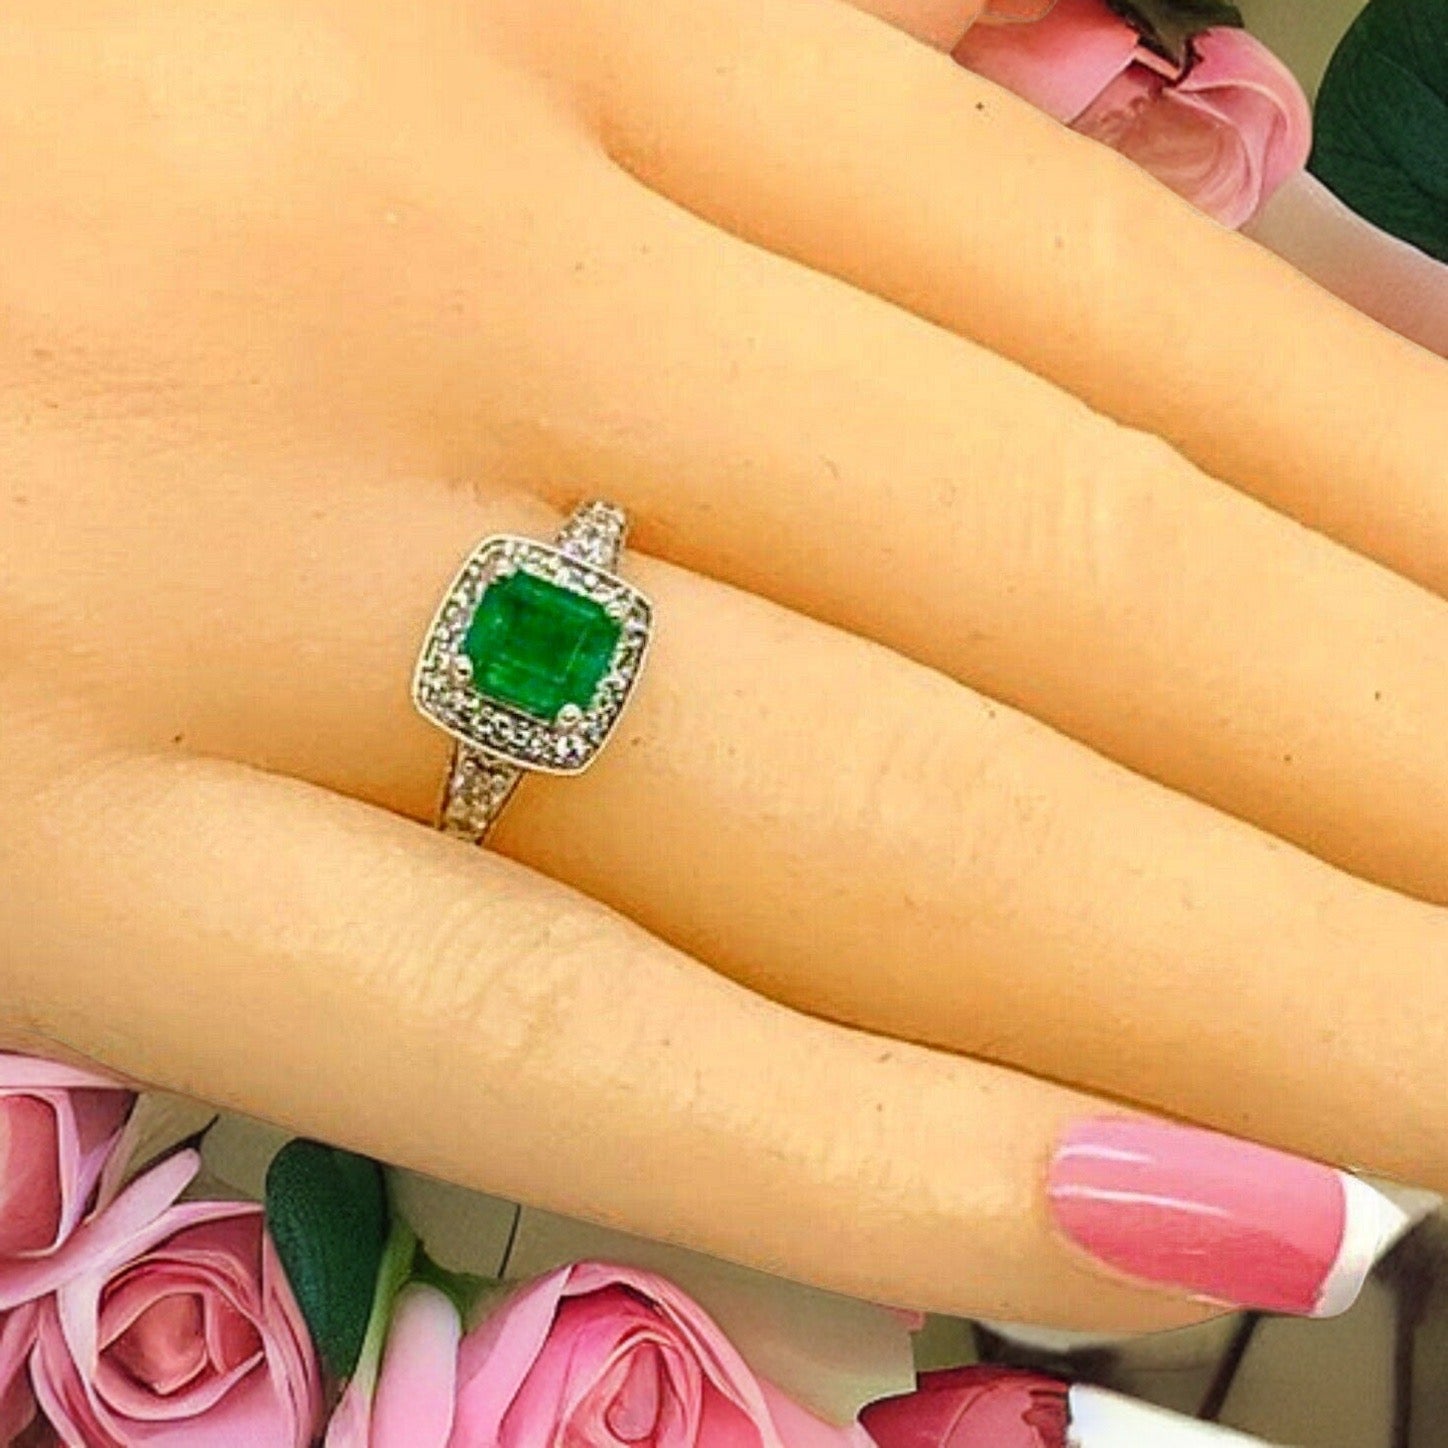 Diamond Emerald Ring 14k Gold 1.40 TCW Certified $4,950 920938 - Certified Fine Jewelry